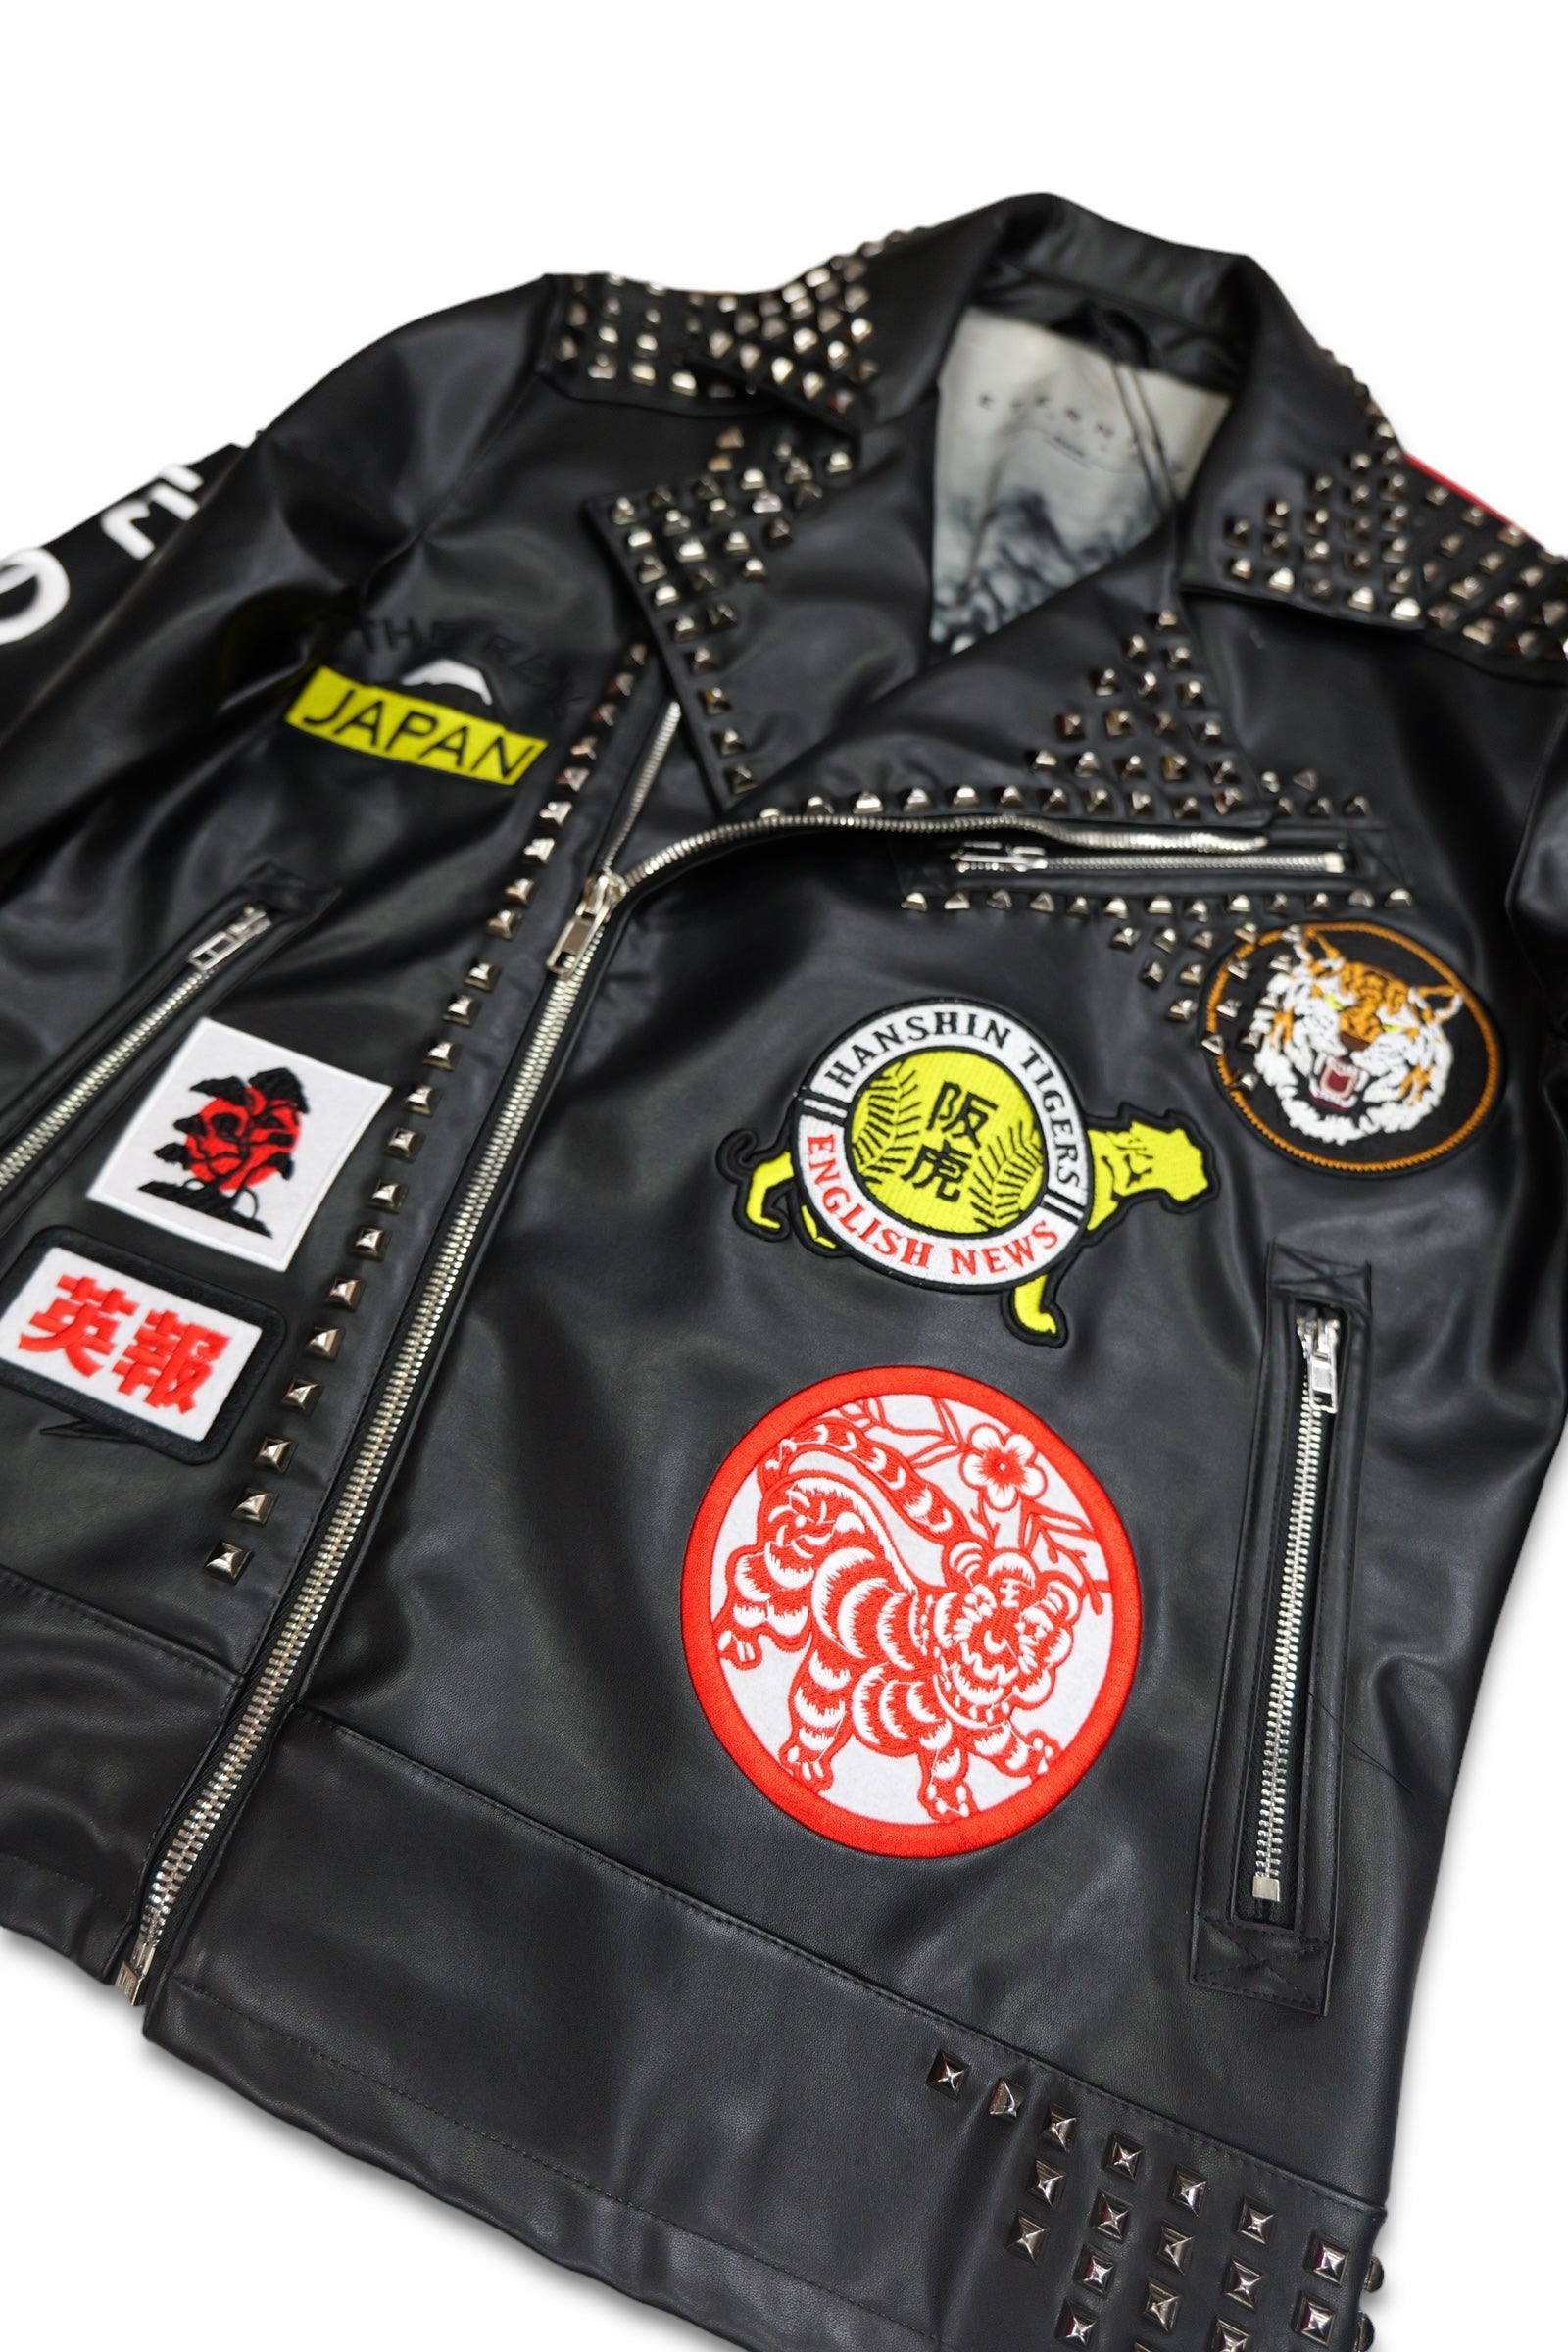 Eternity Leather Tigers Jacket